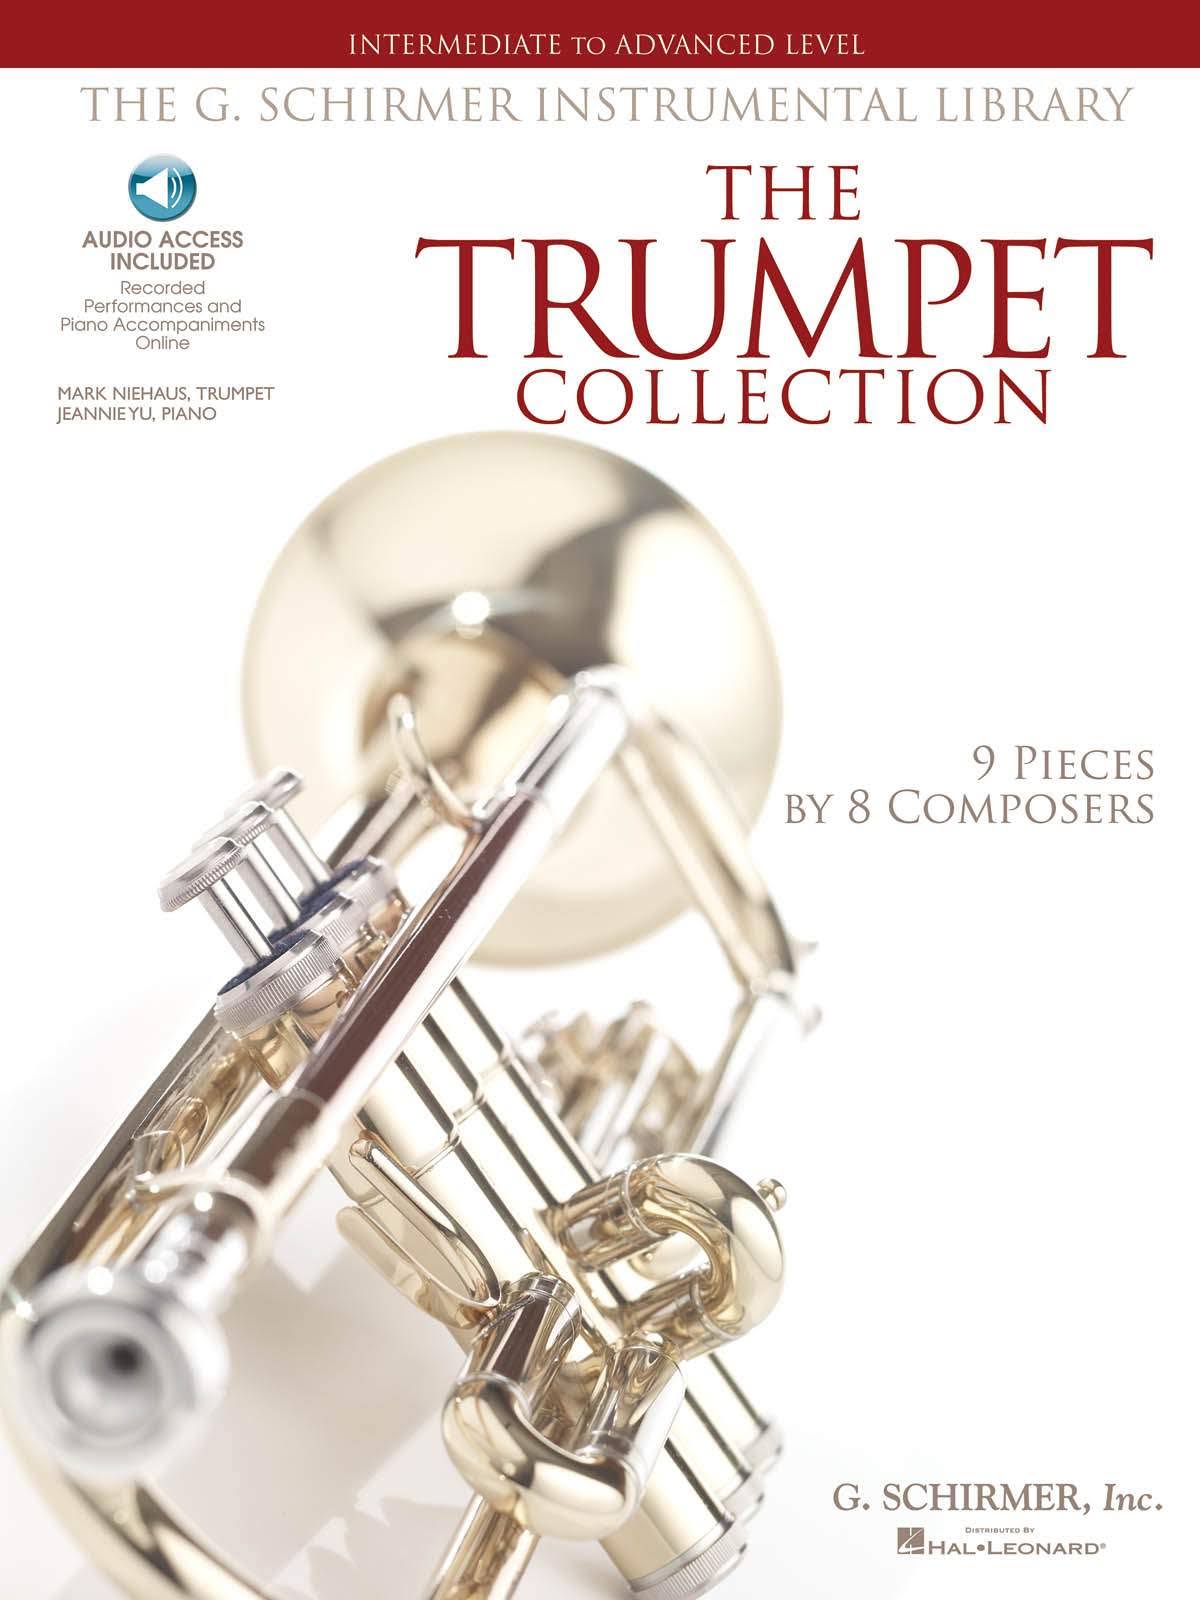 G. Schirmer Trumpet Collection Advanced